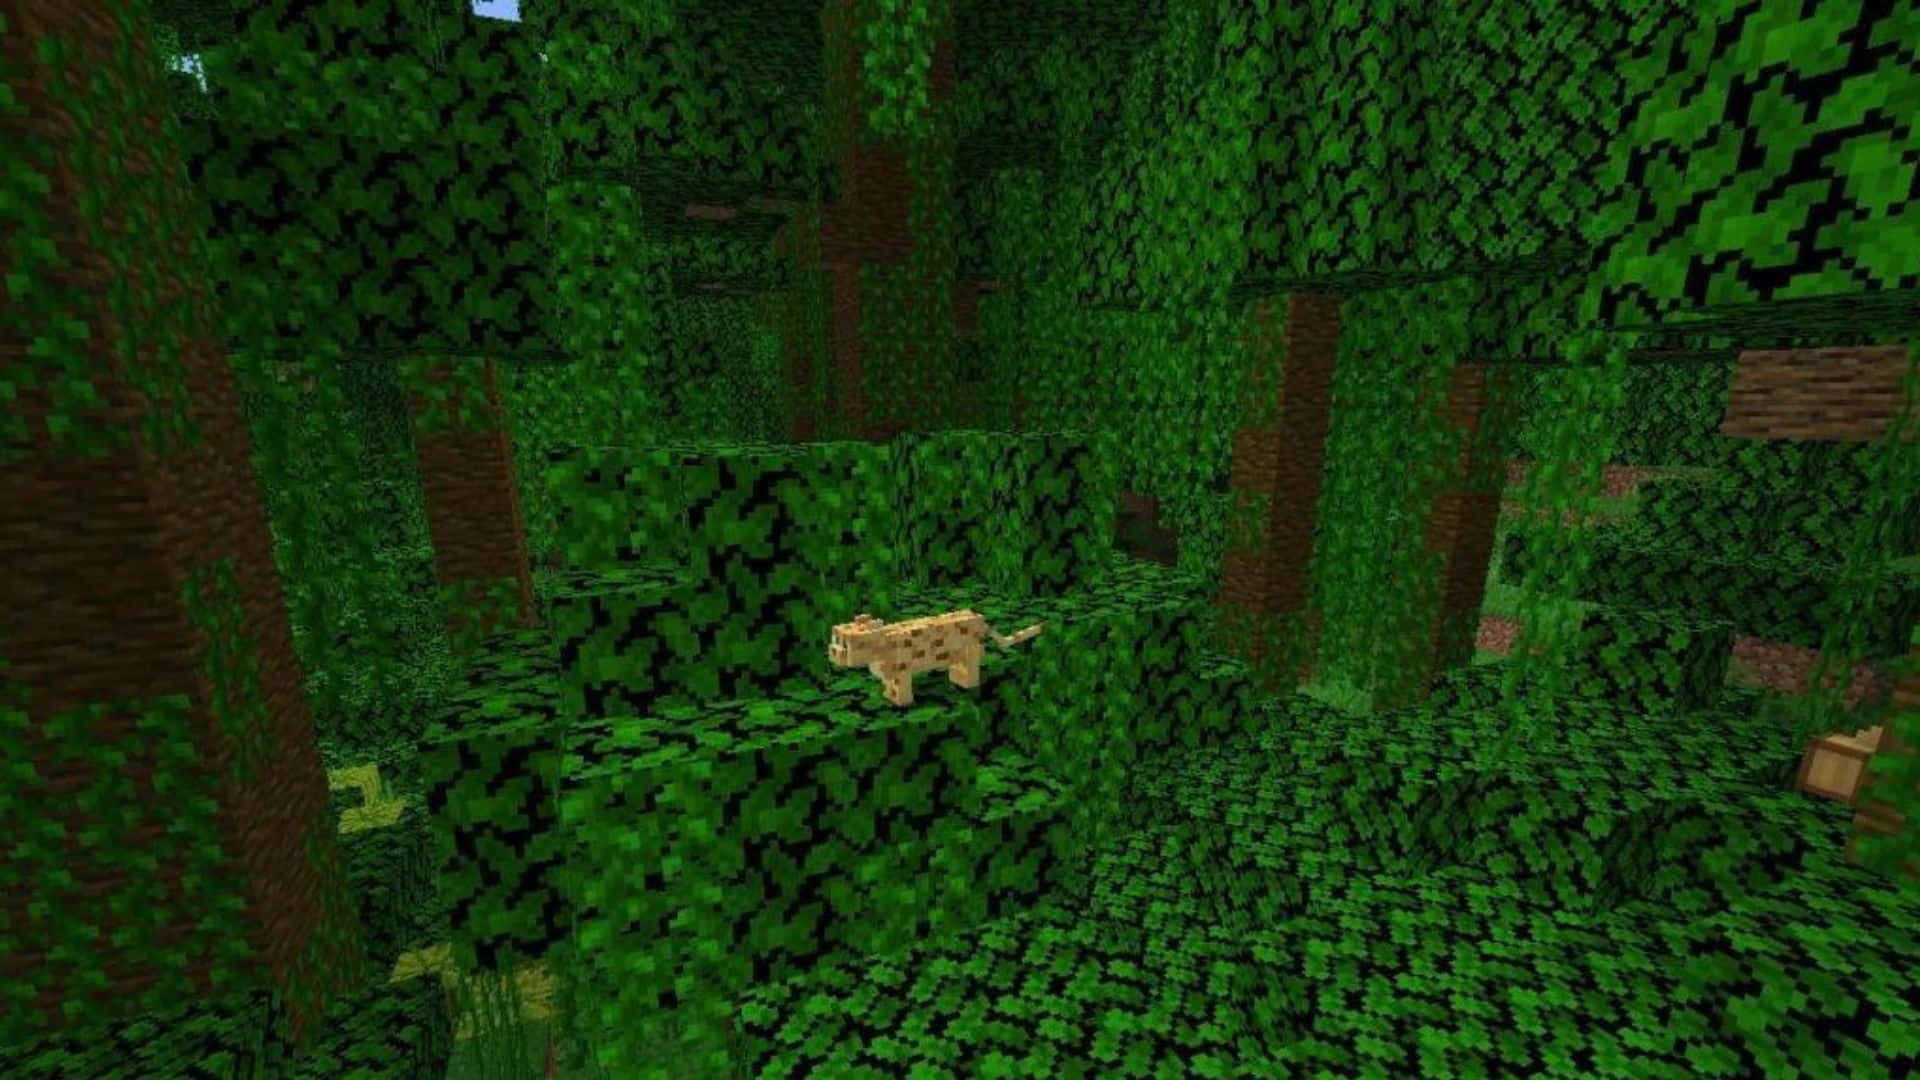 A Friendly Minecraft Ocelot in a Lush Jungle Environment Wallpaper